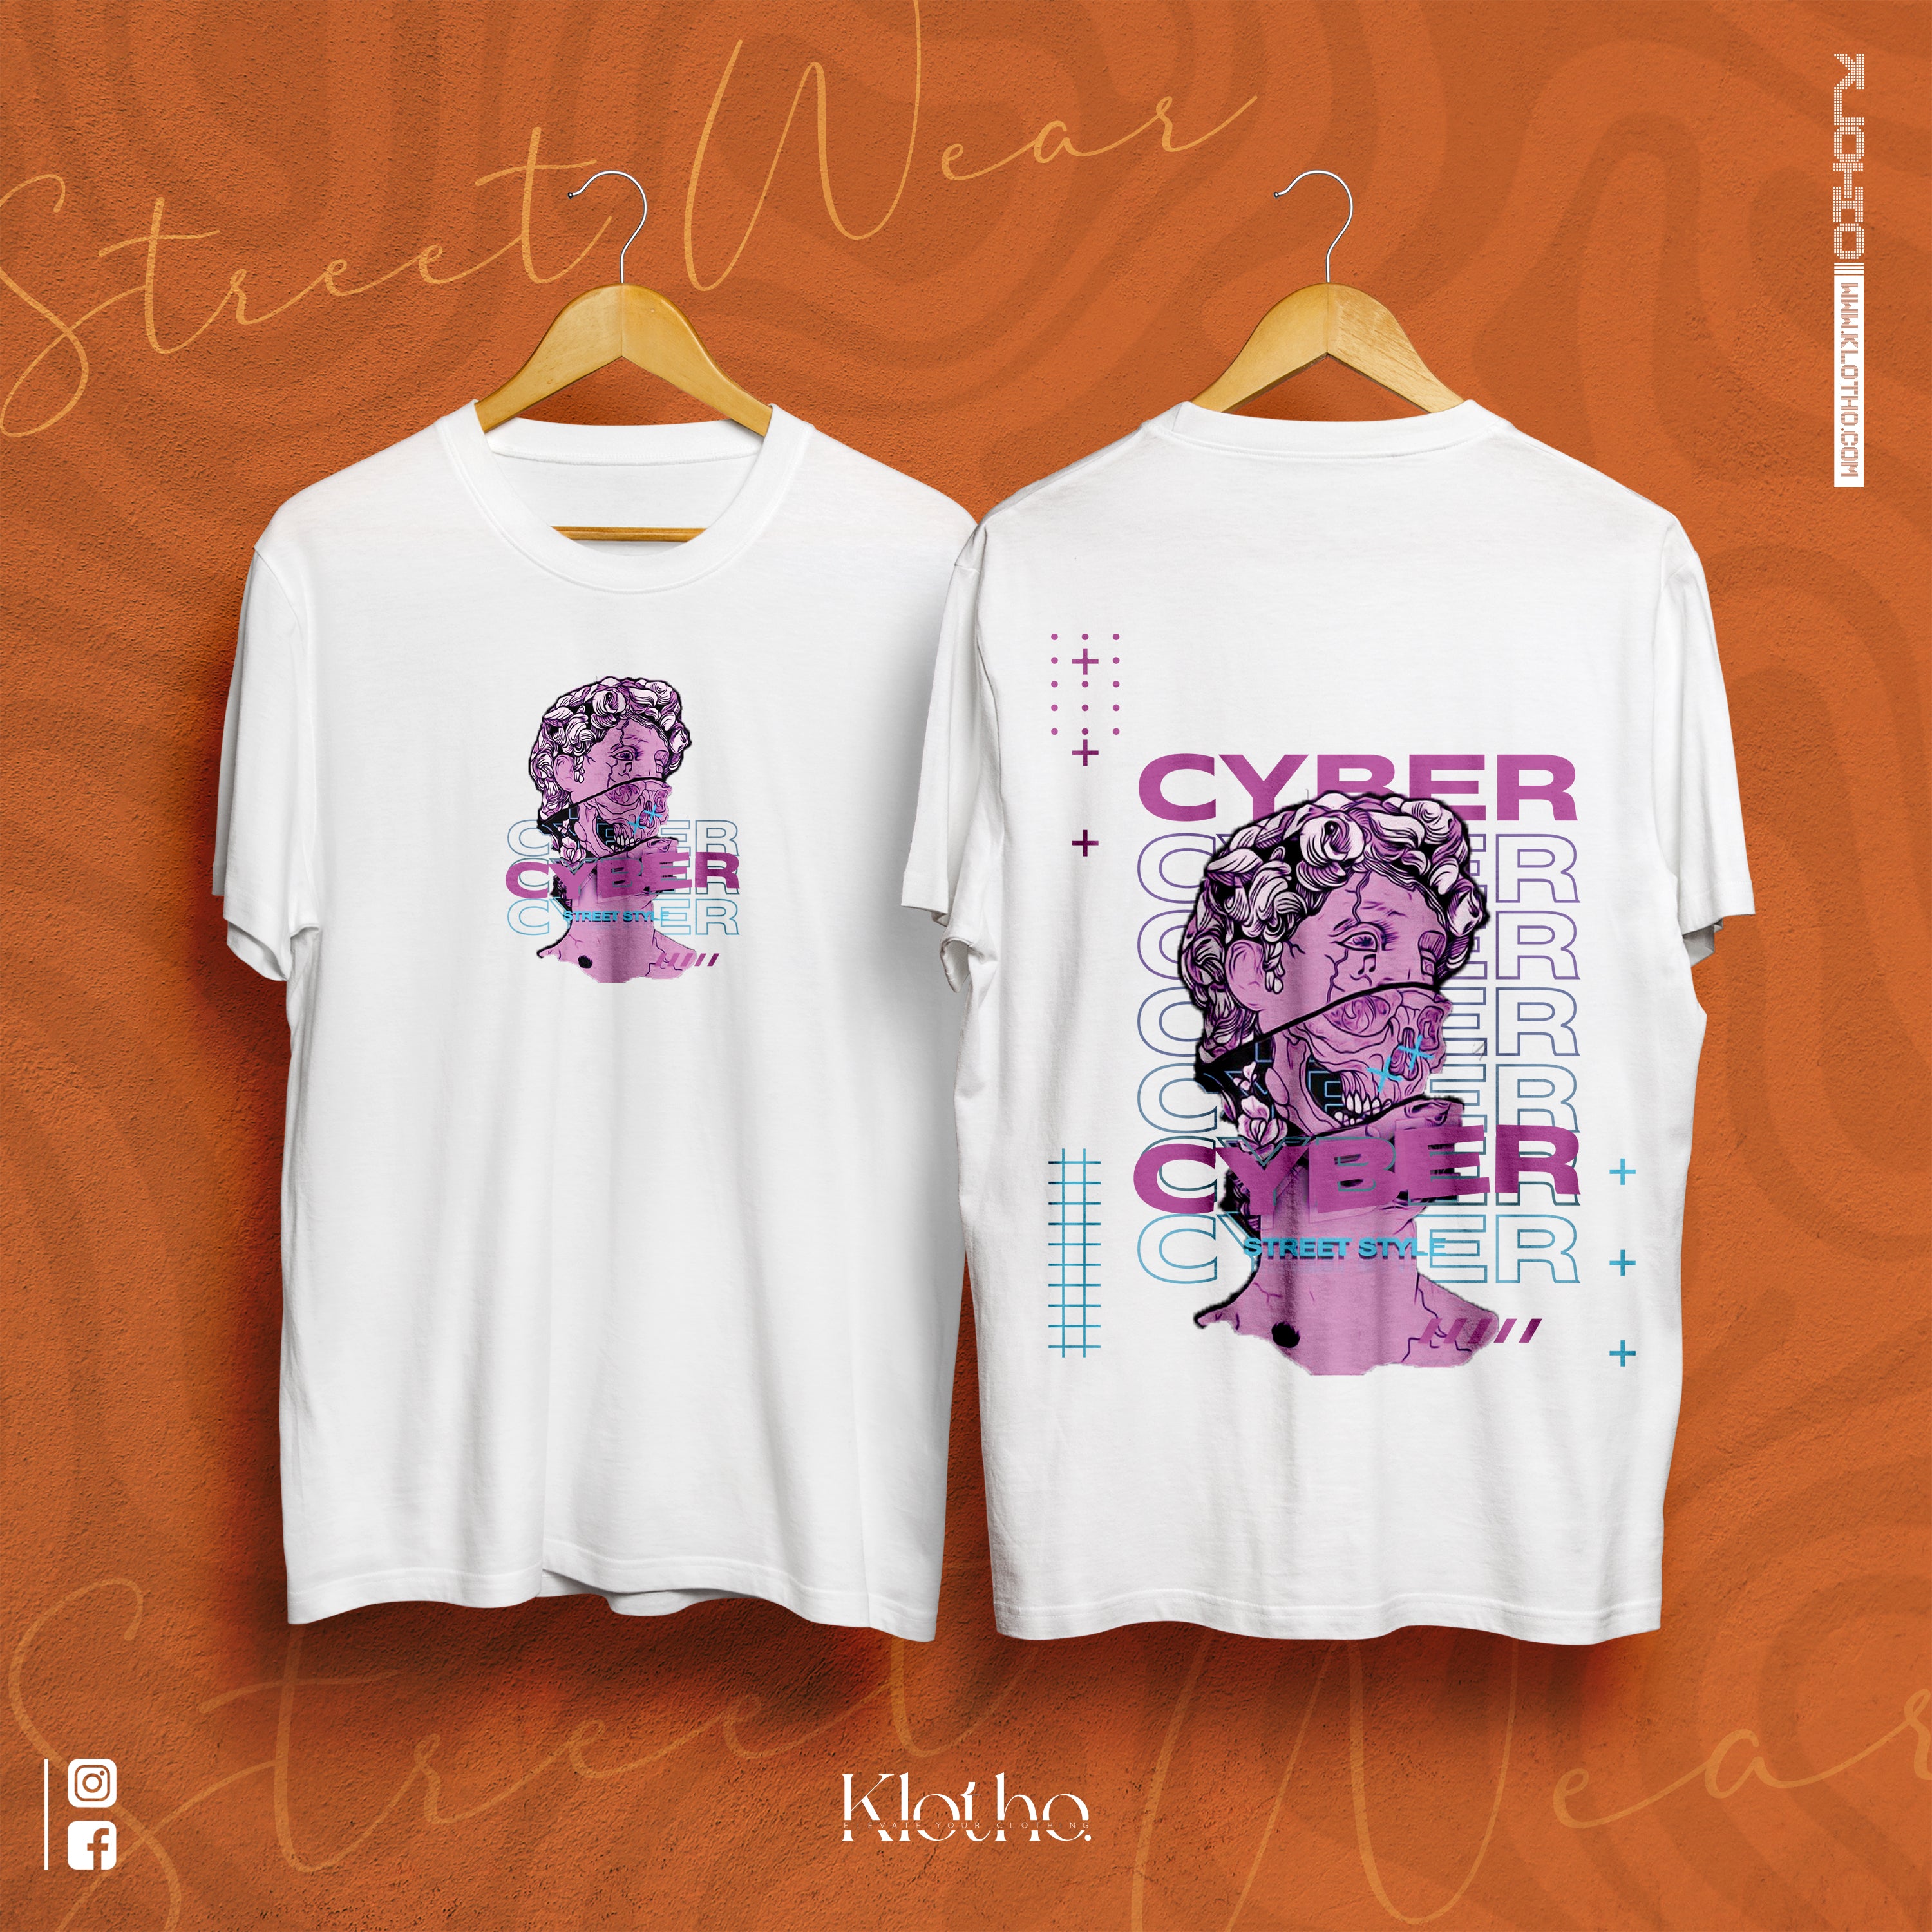 Cyber Street Style - Unisex Graphic Tee